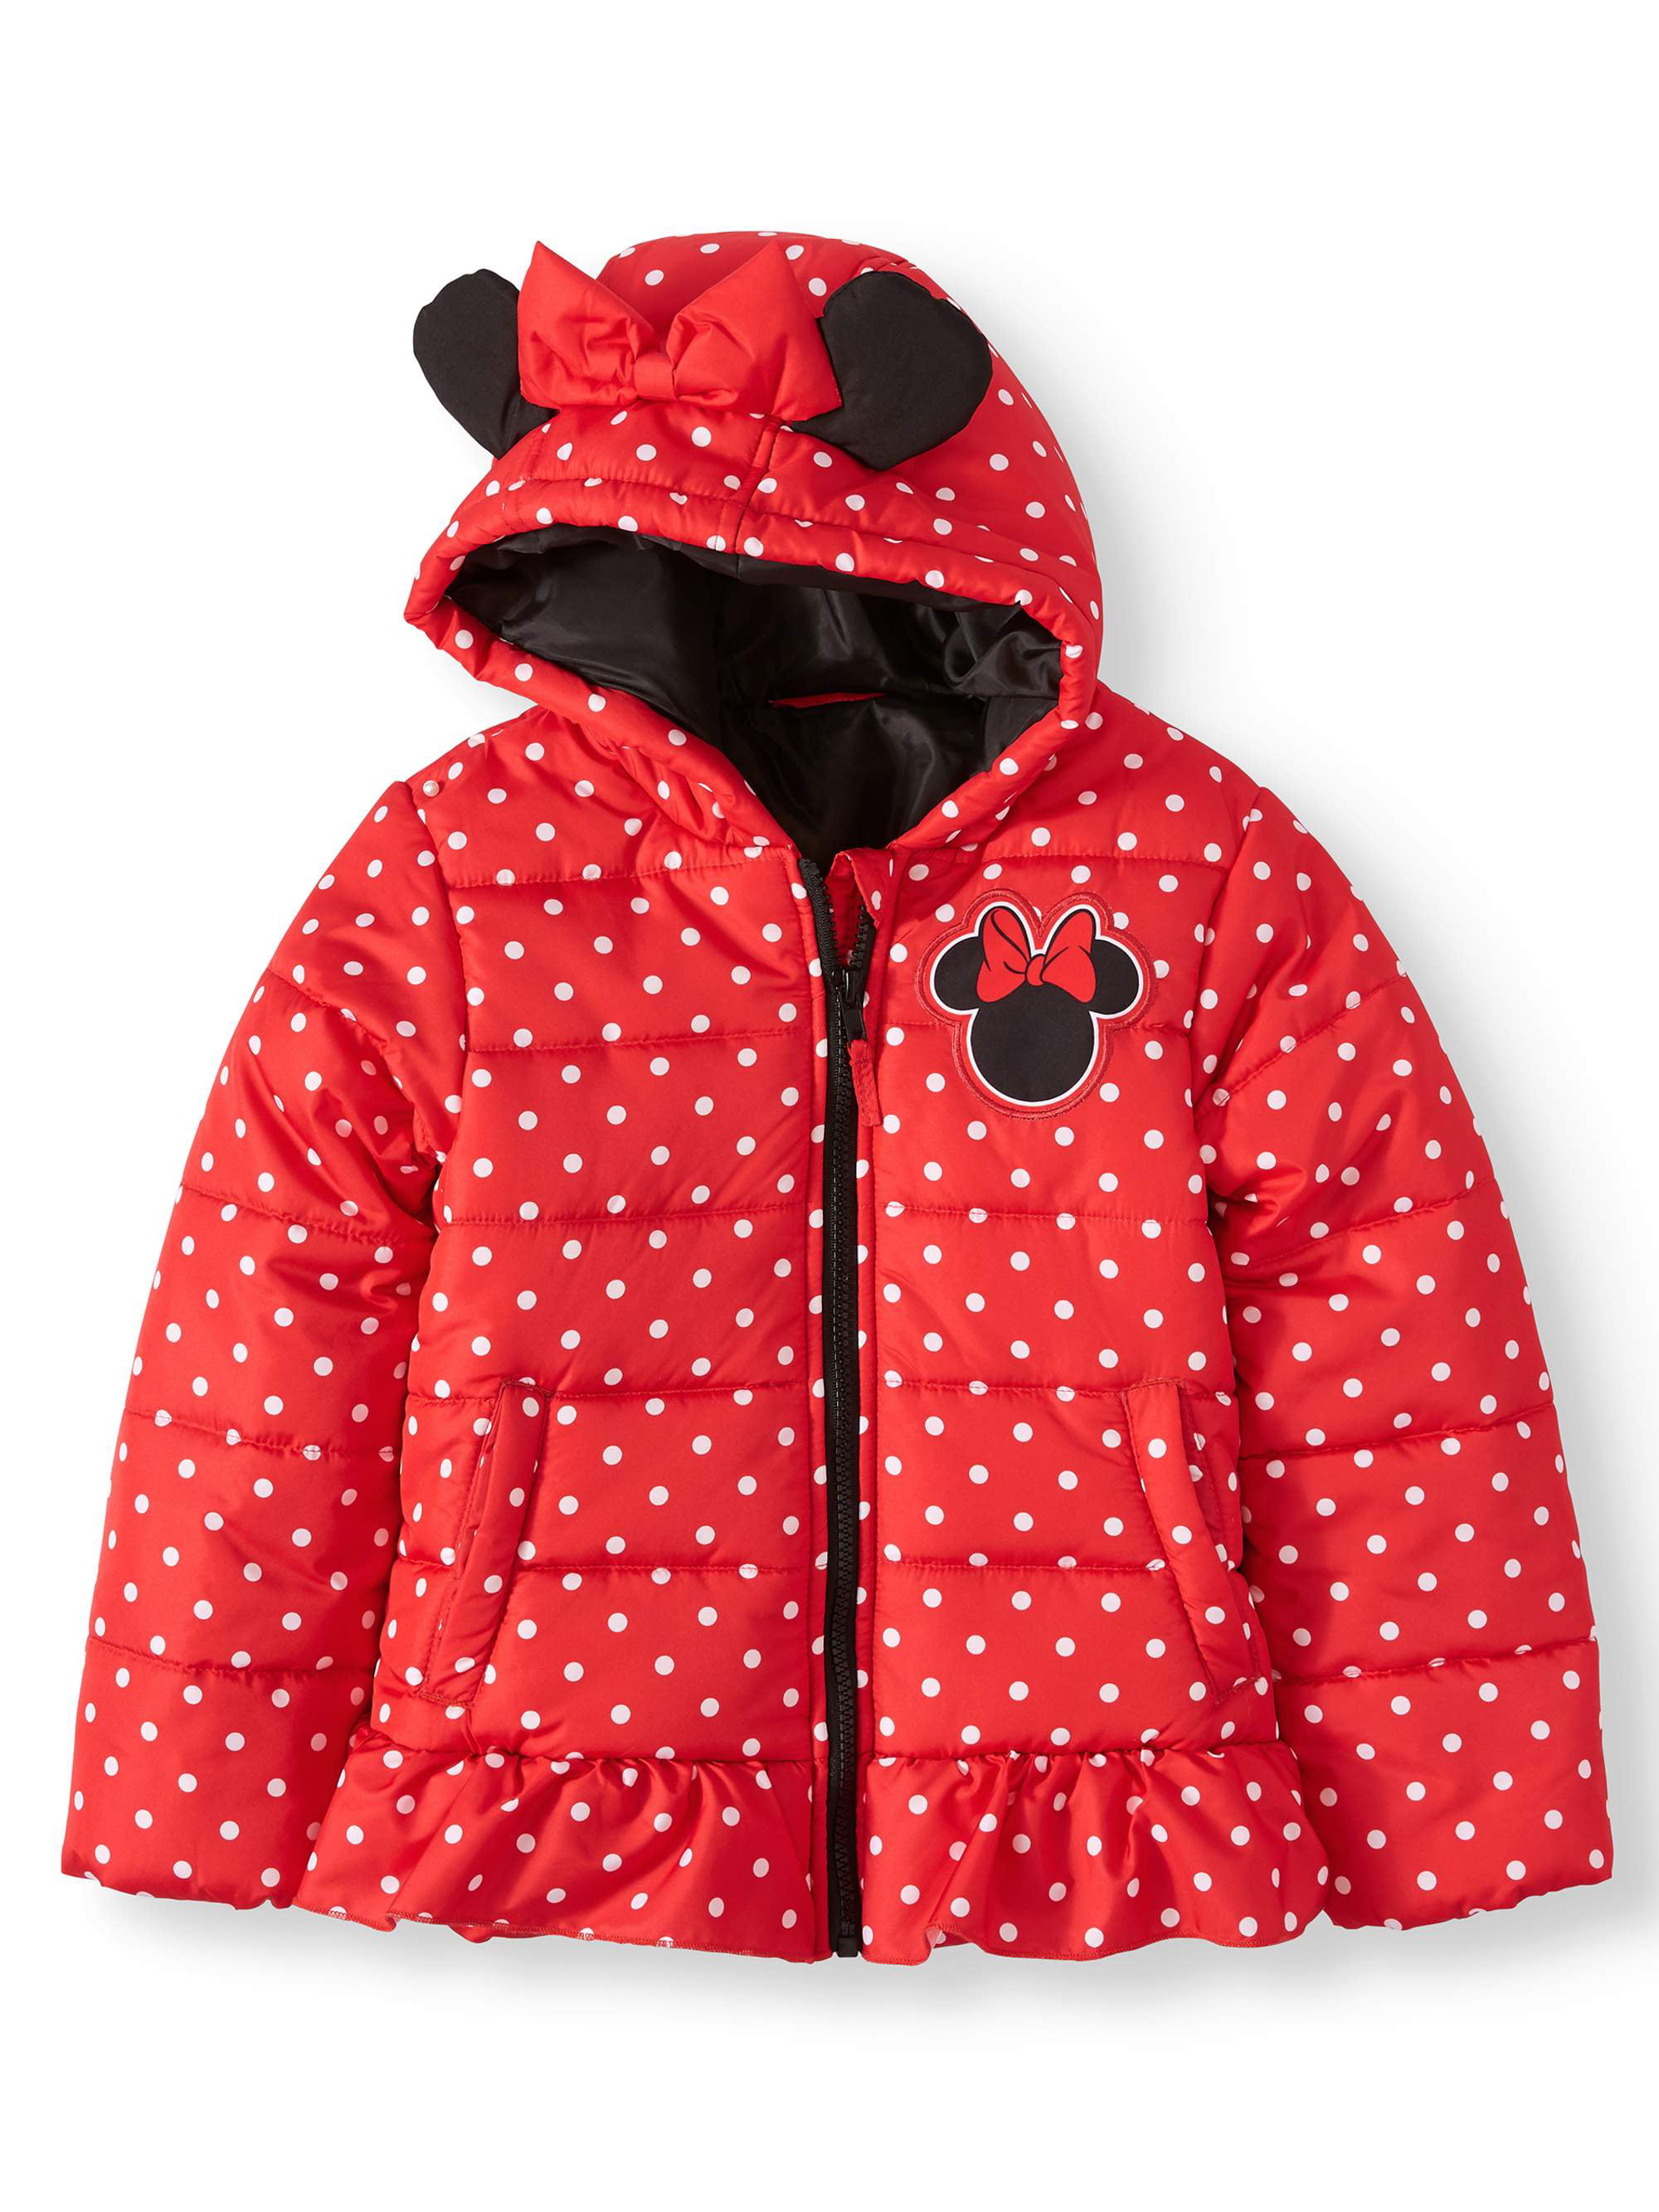 Disney Minnie Mouse Puffer Jacket Coat 